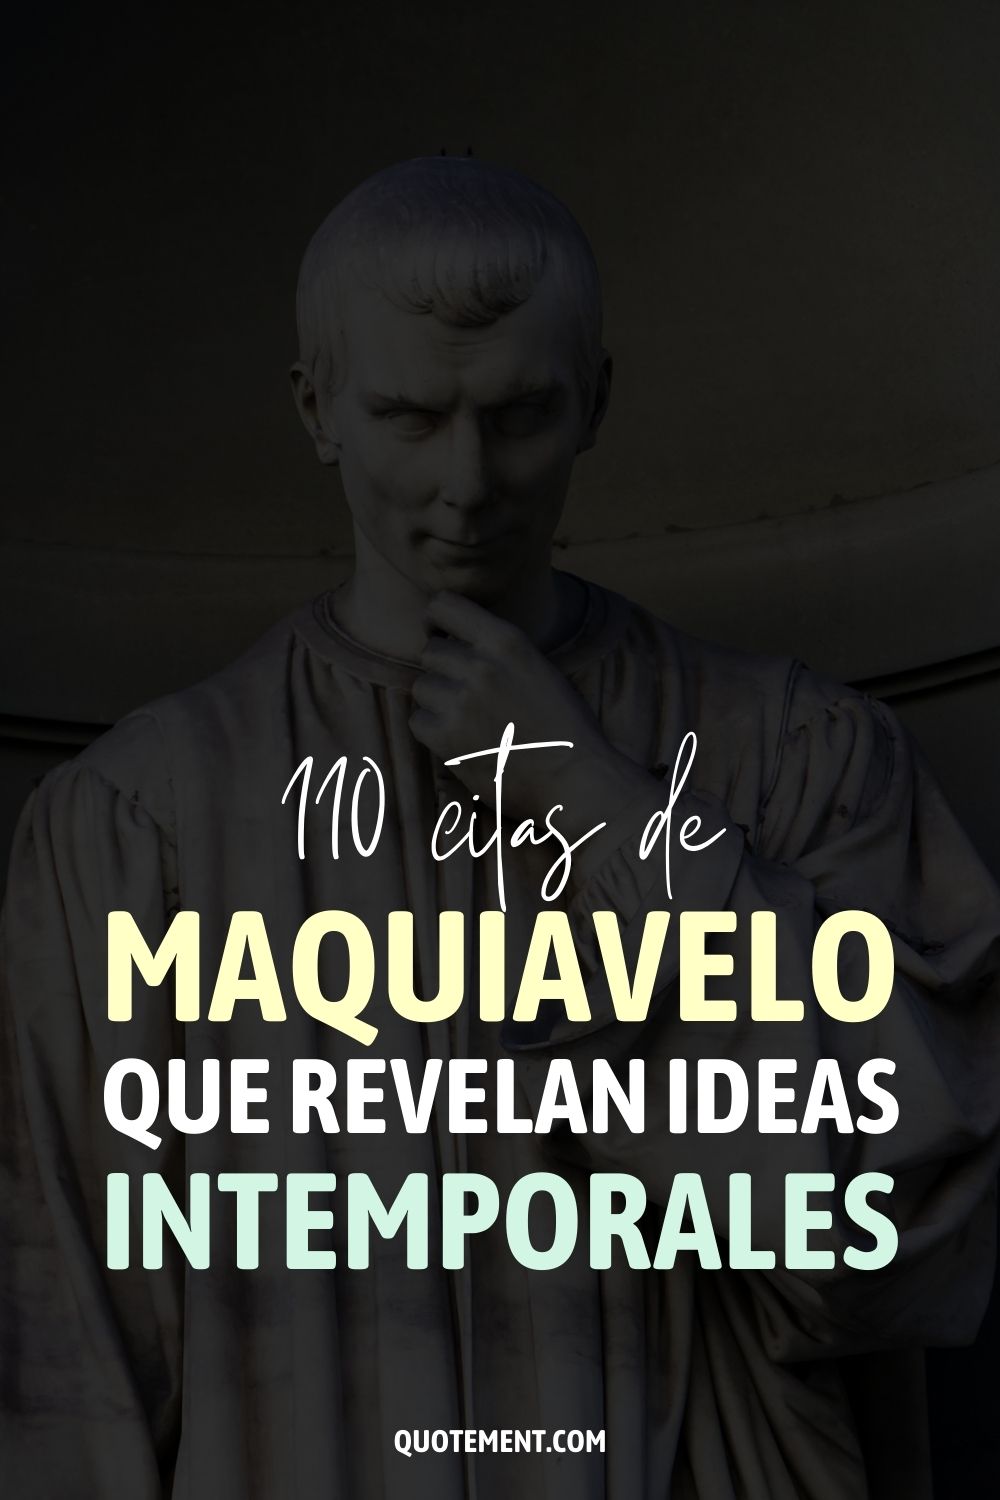 110 citas de Maquiavelo que revelan ideas intemporales